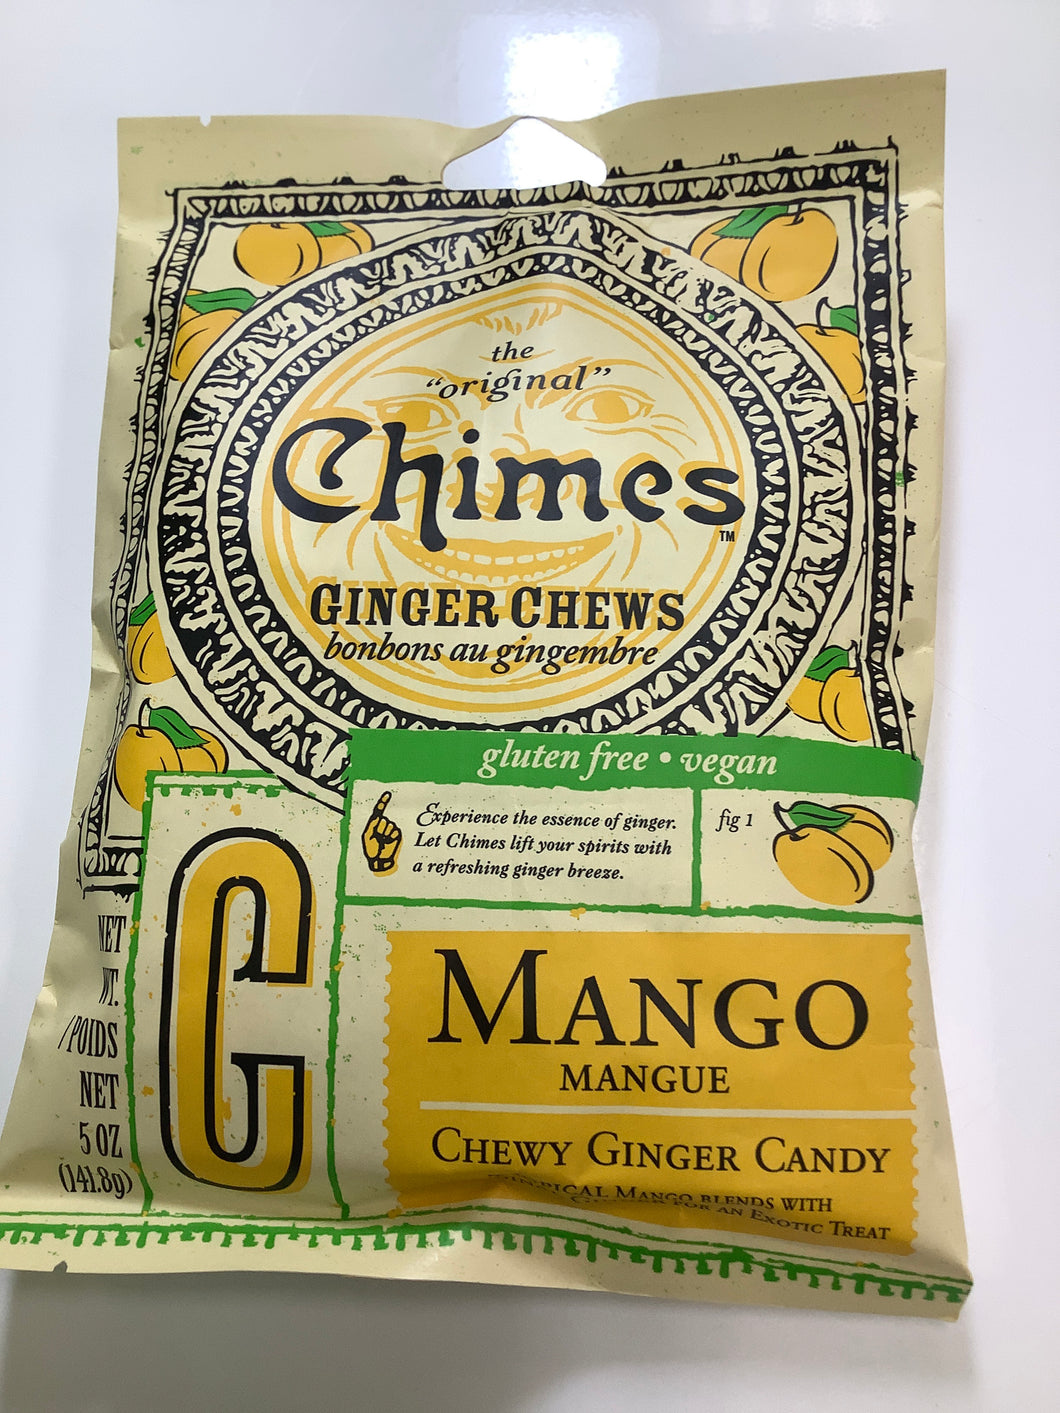 The Chimes Ginger Chews Mango